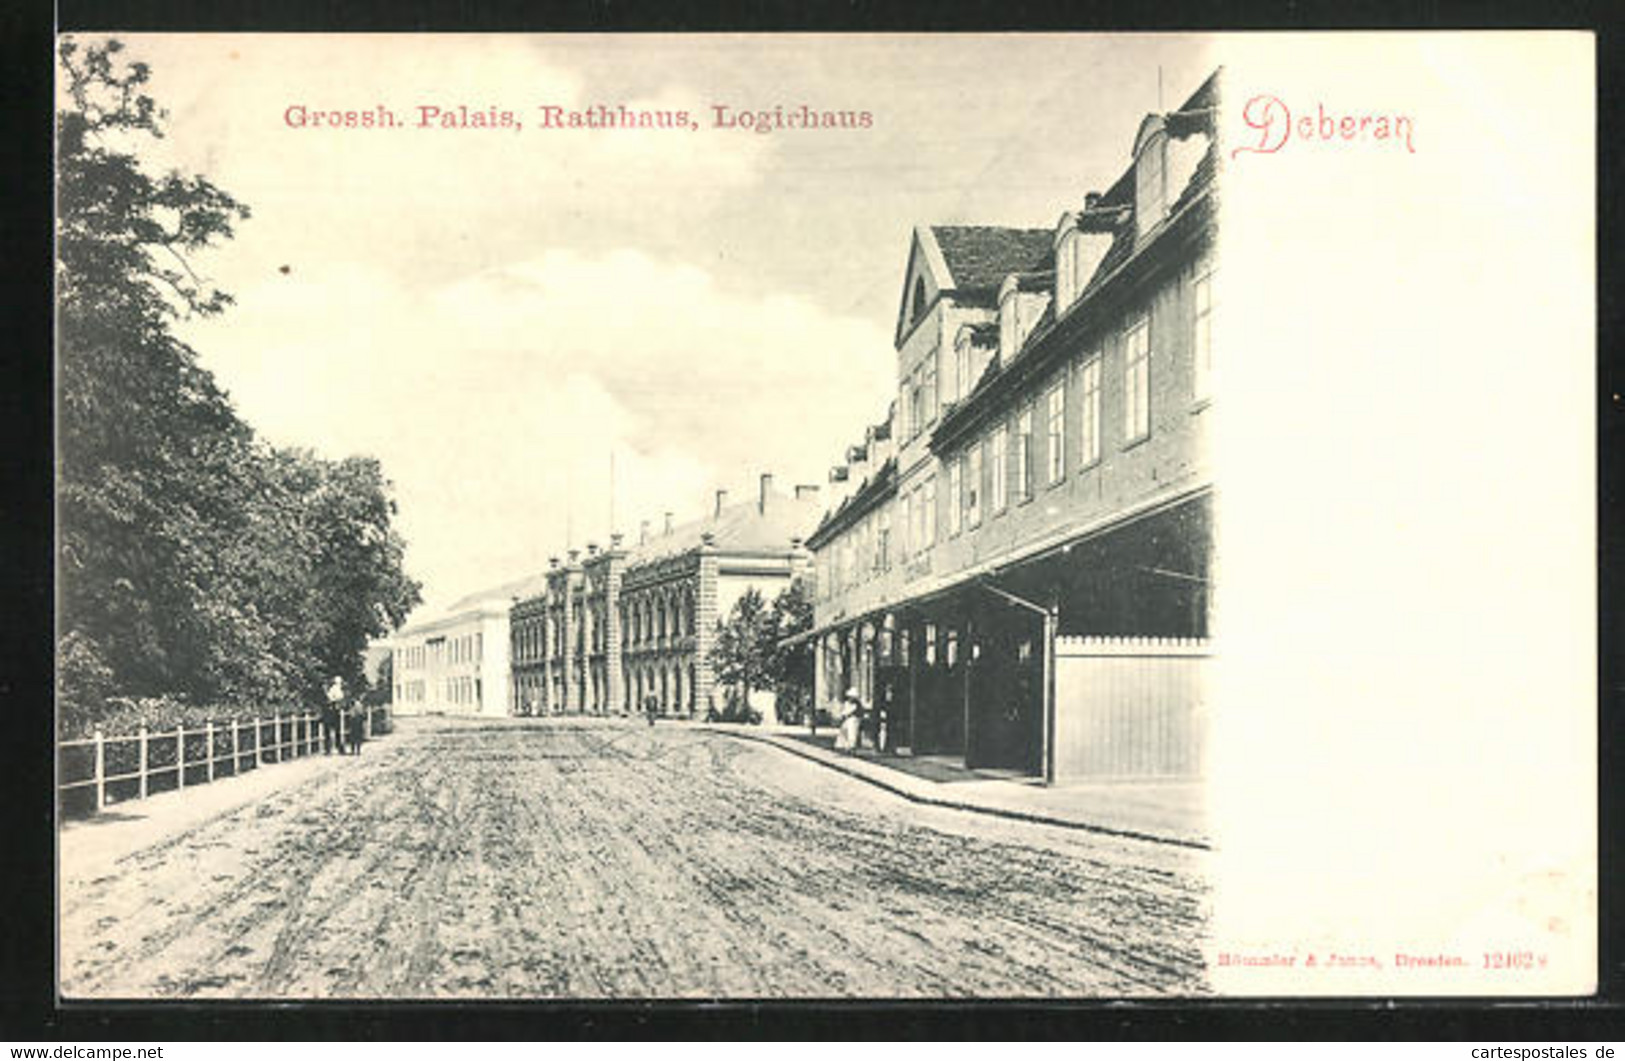 AK Doberan, Grossh. Palais, Rathaus, Logierhaus - Bad Doberan